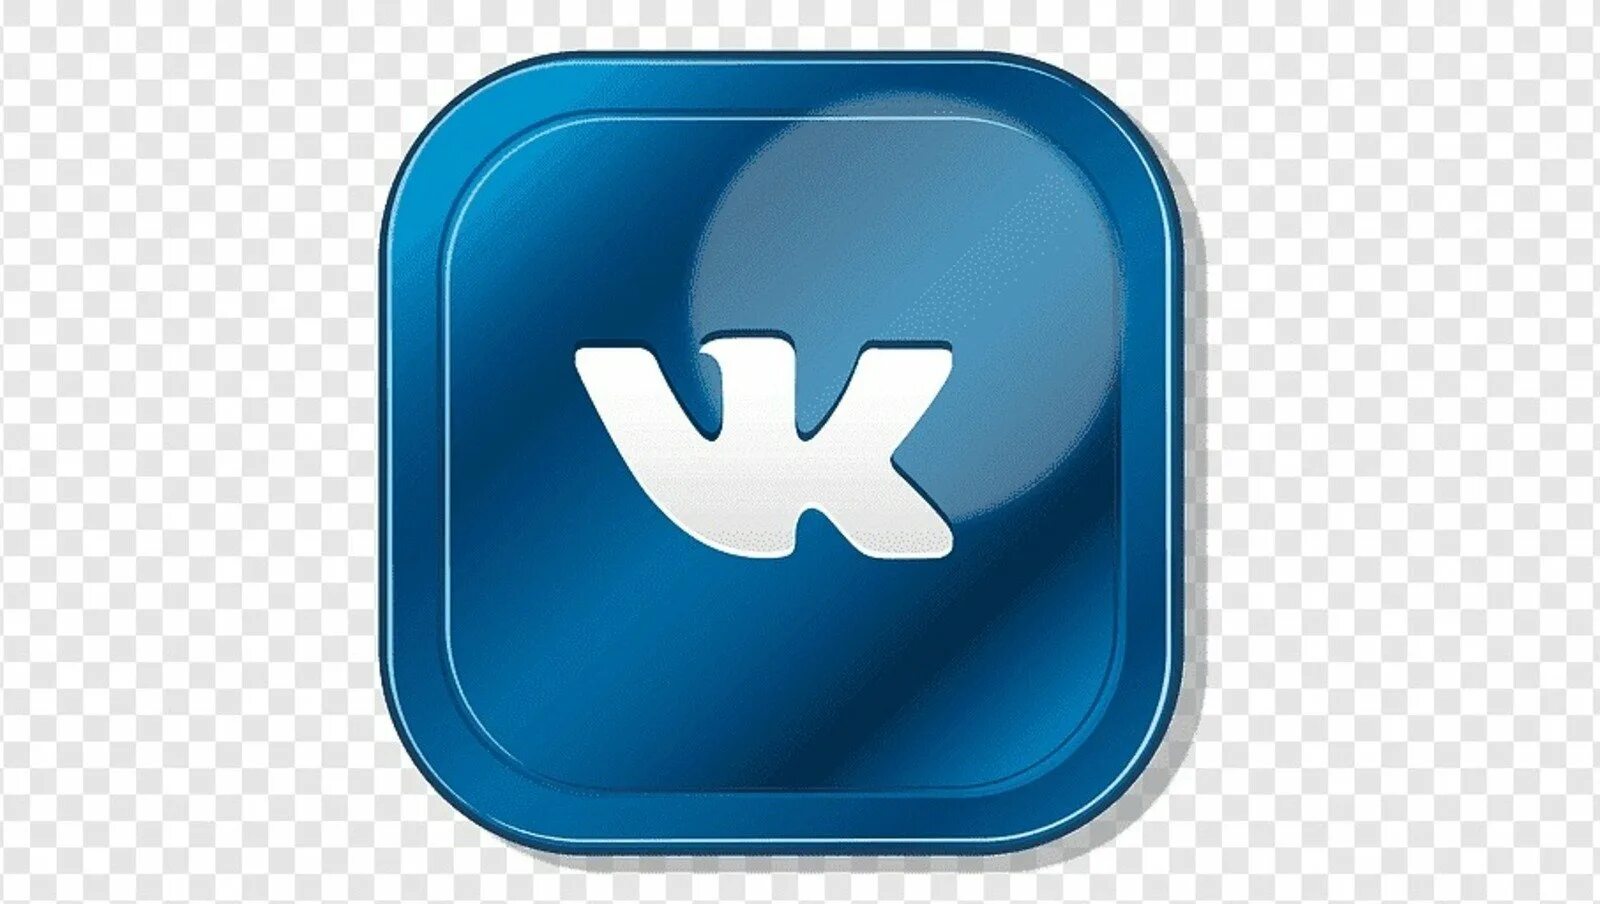 ВКОНТАКТЕ логотип. Значок Вики. Логотип ВК на прозрачном фоне. Прозрачный значок ВК.